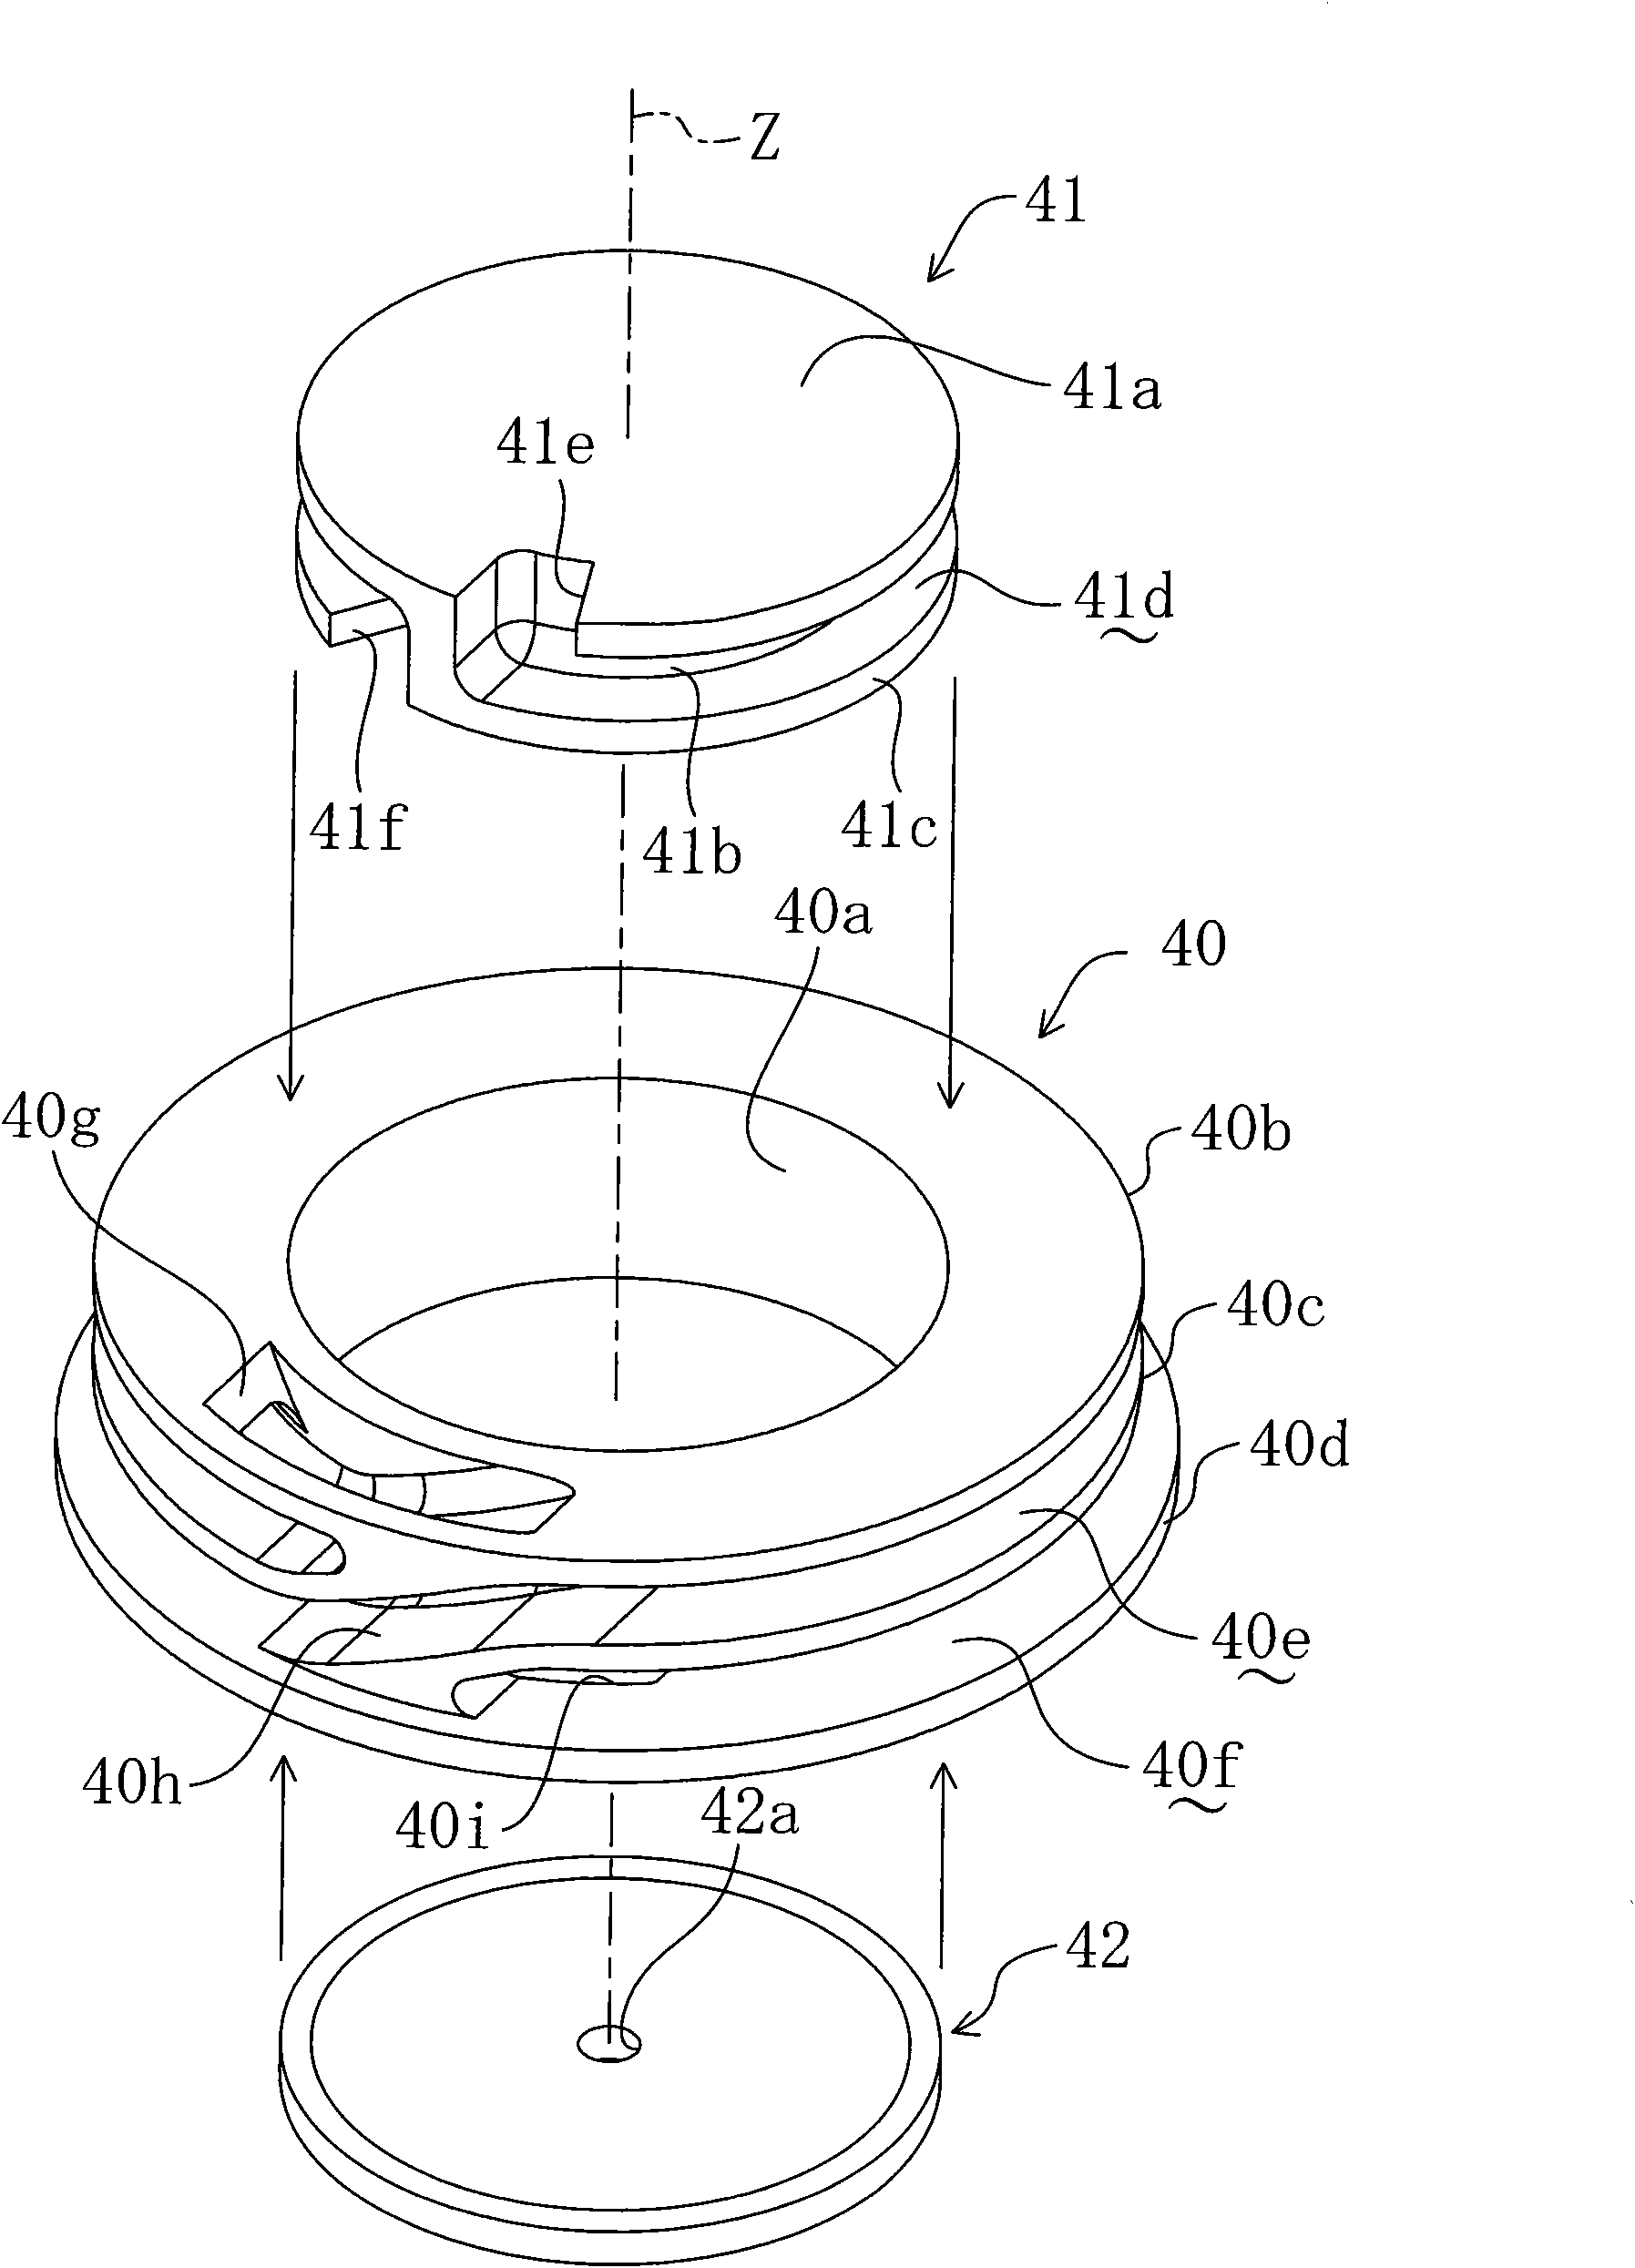 Liquid-filled vibration isolator